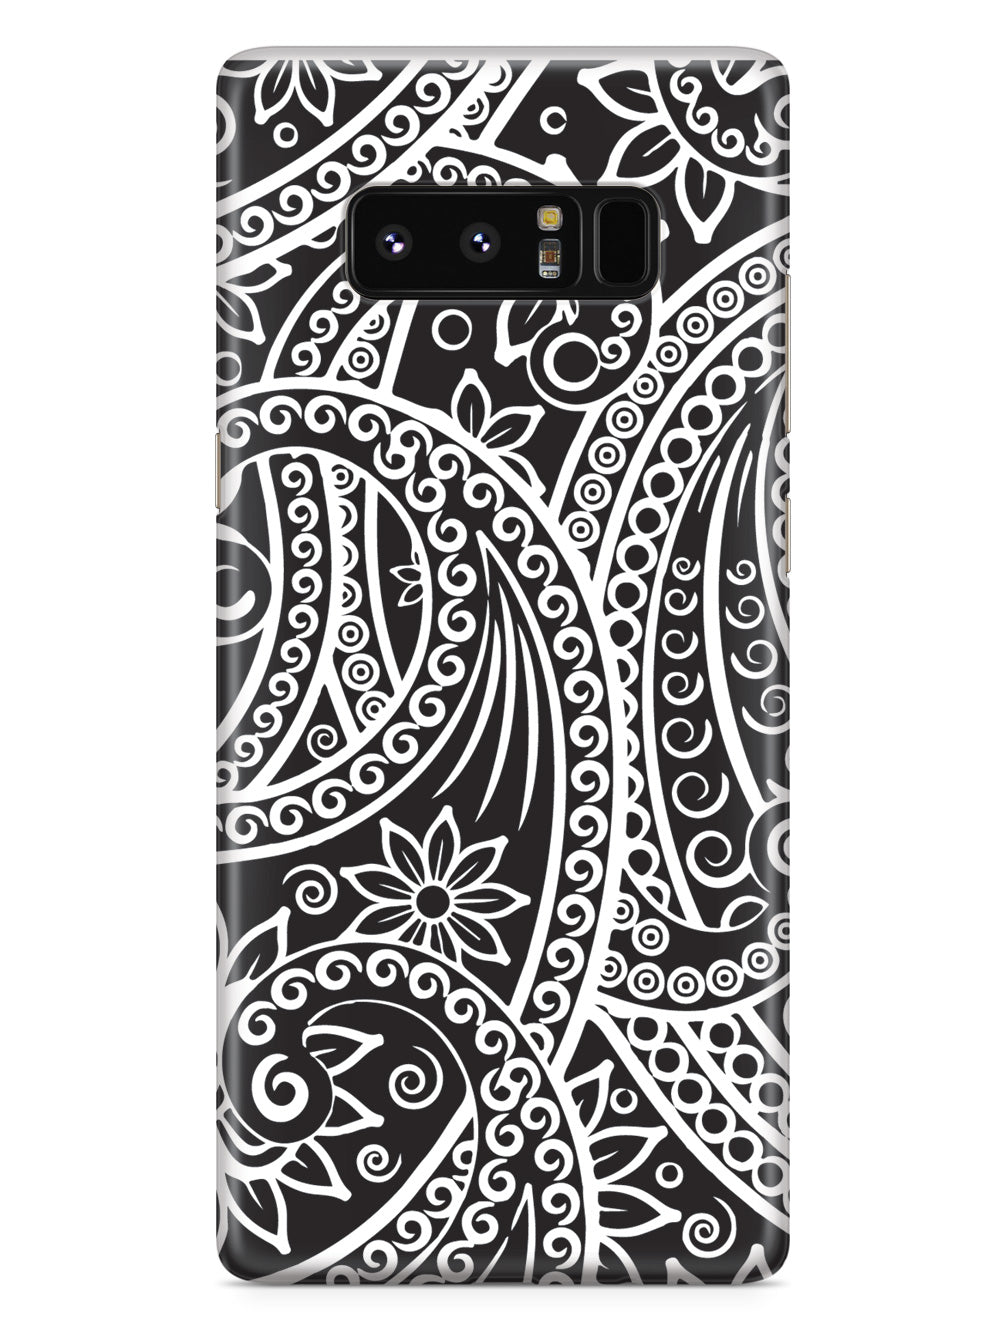 Black & White Swirl Pattern Case